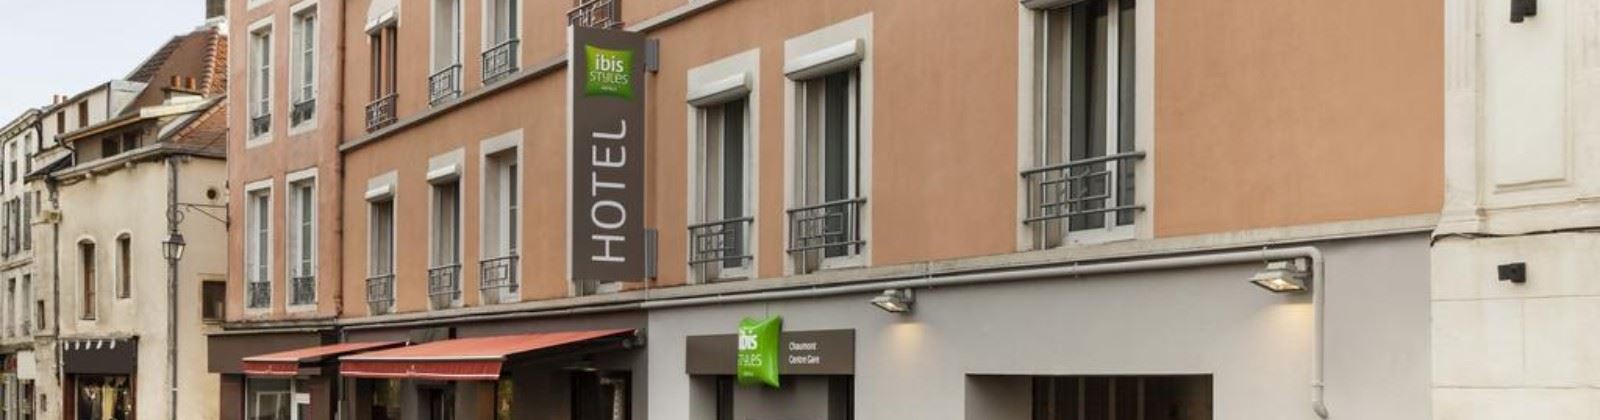 OLEVENE image - ibis-styles-chaumont-centre-gare-olevene-hotel-seminaire-restaurant-booking-evenement-